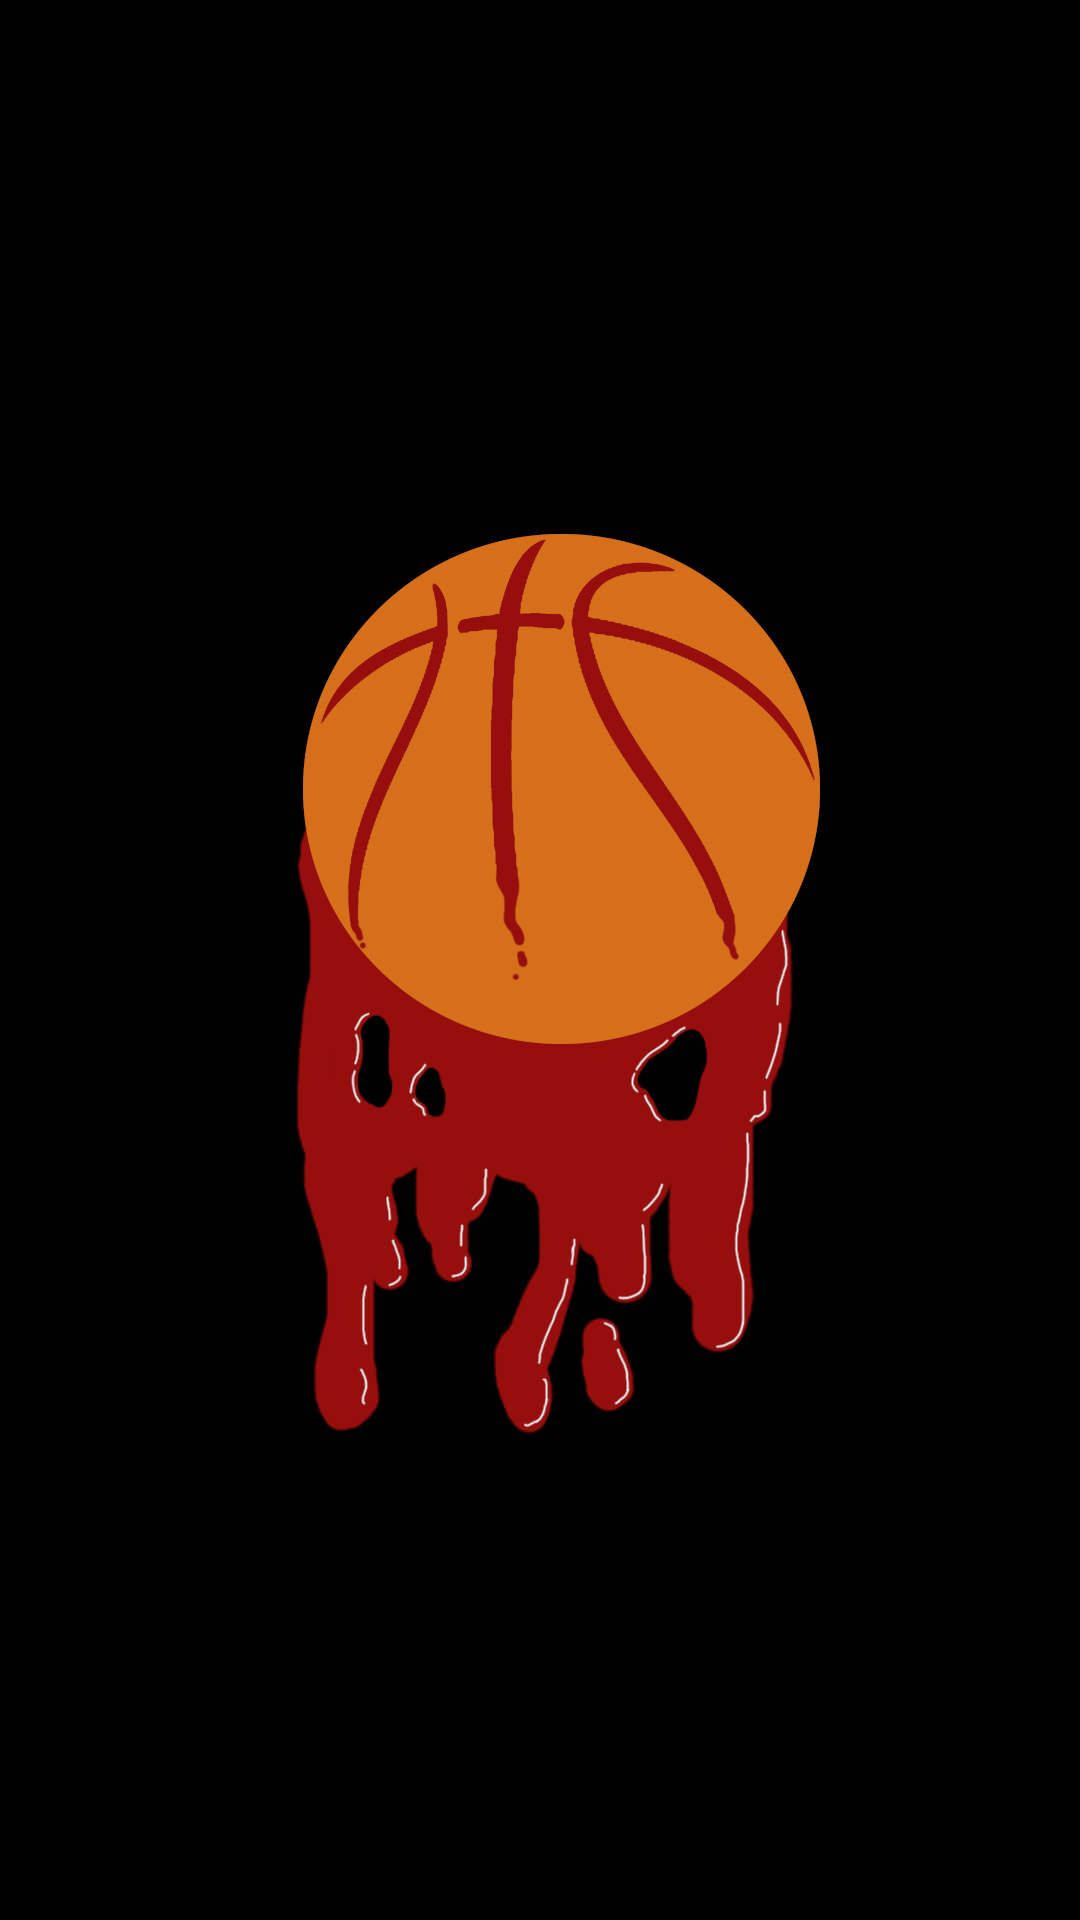 Black Drippy Basketball Background